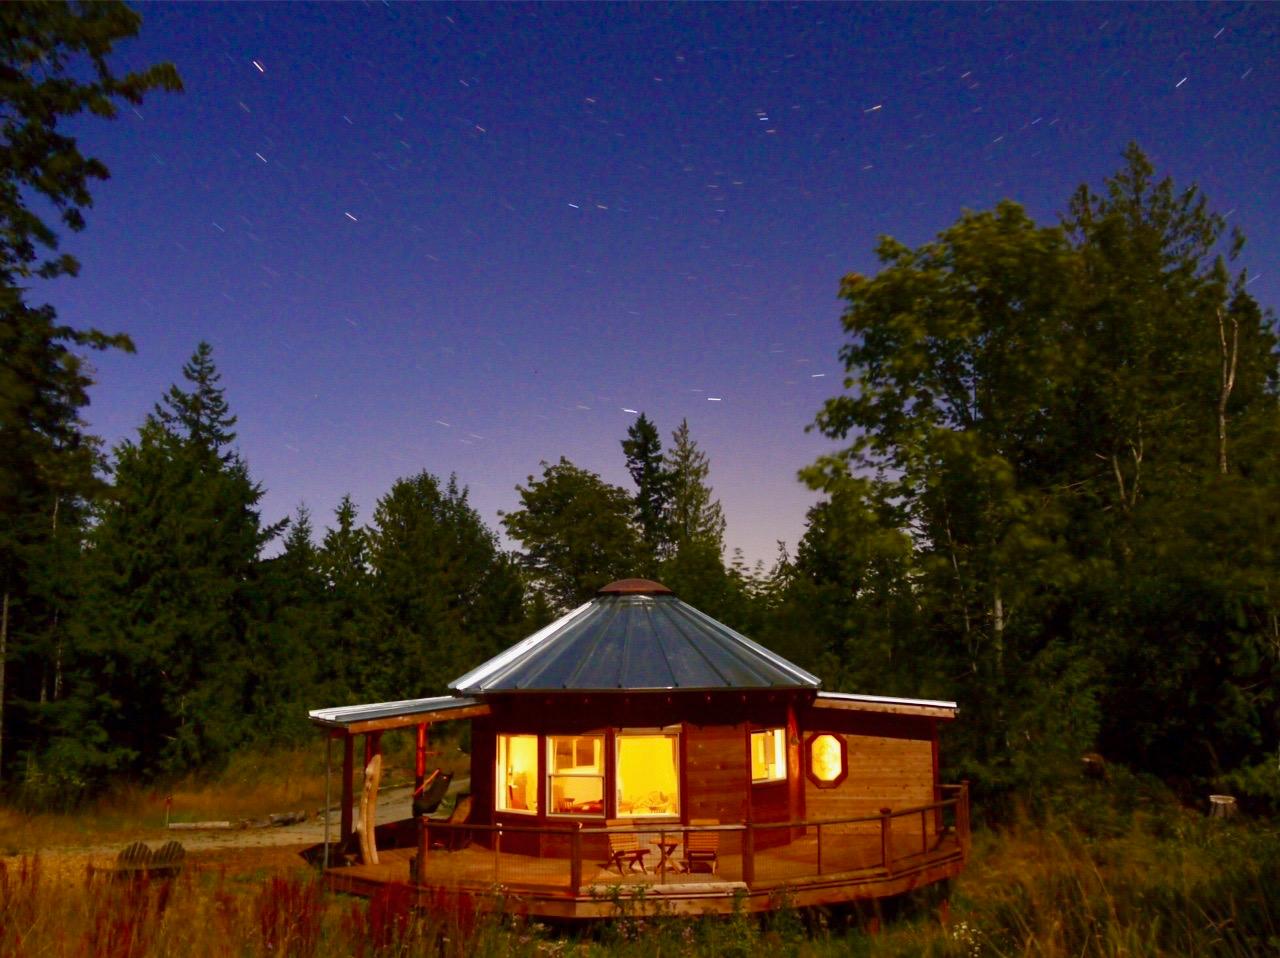 Small wooden yurt lighting up the night sky